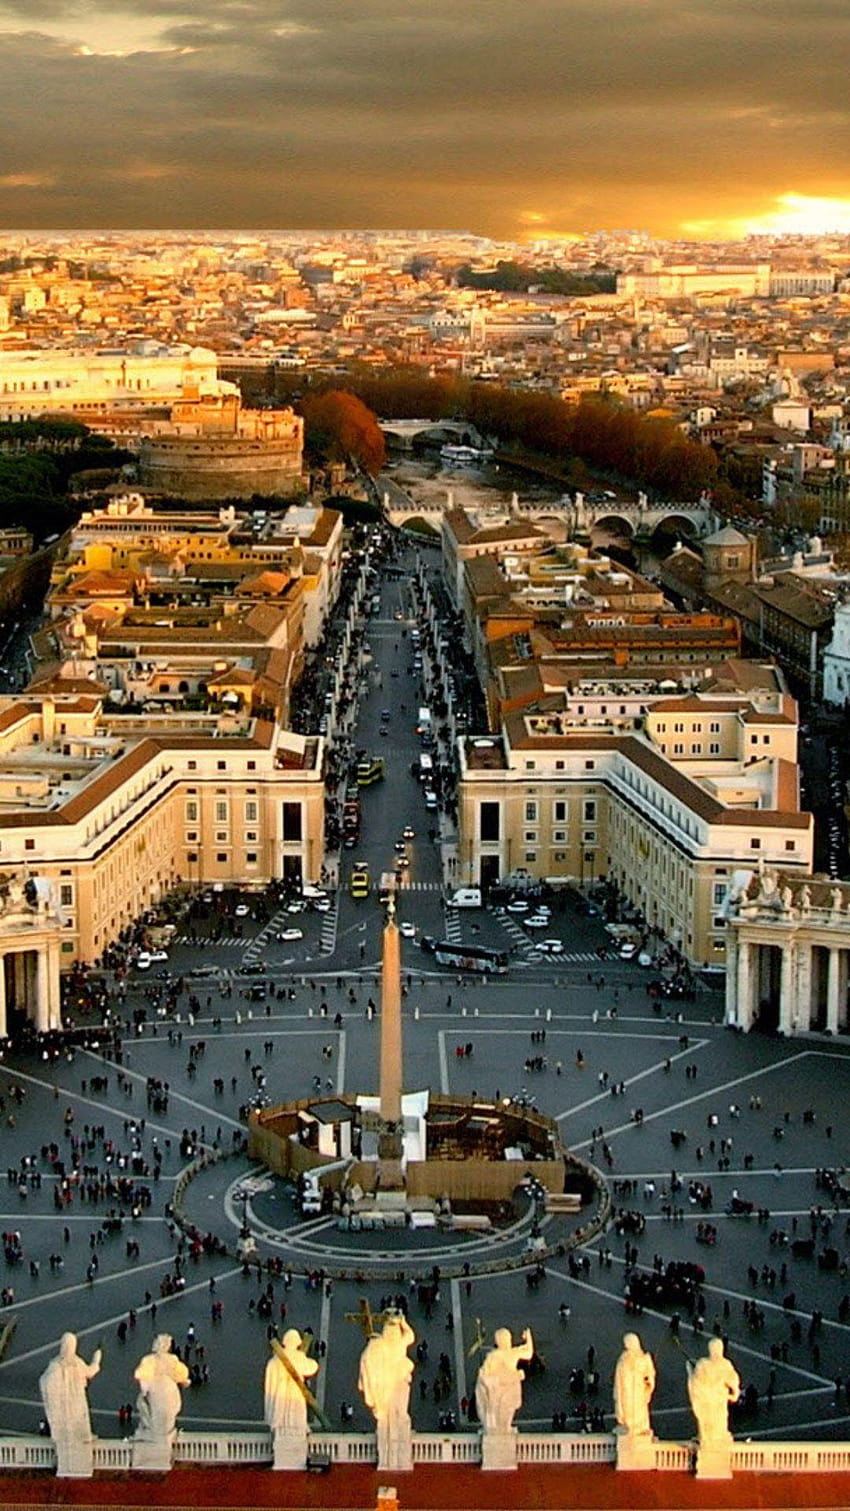 Rome from Saint Peter's Basilica - Italy 4K Wallpaper / De… | Flickr